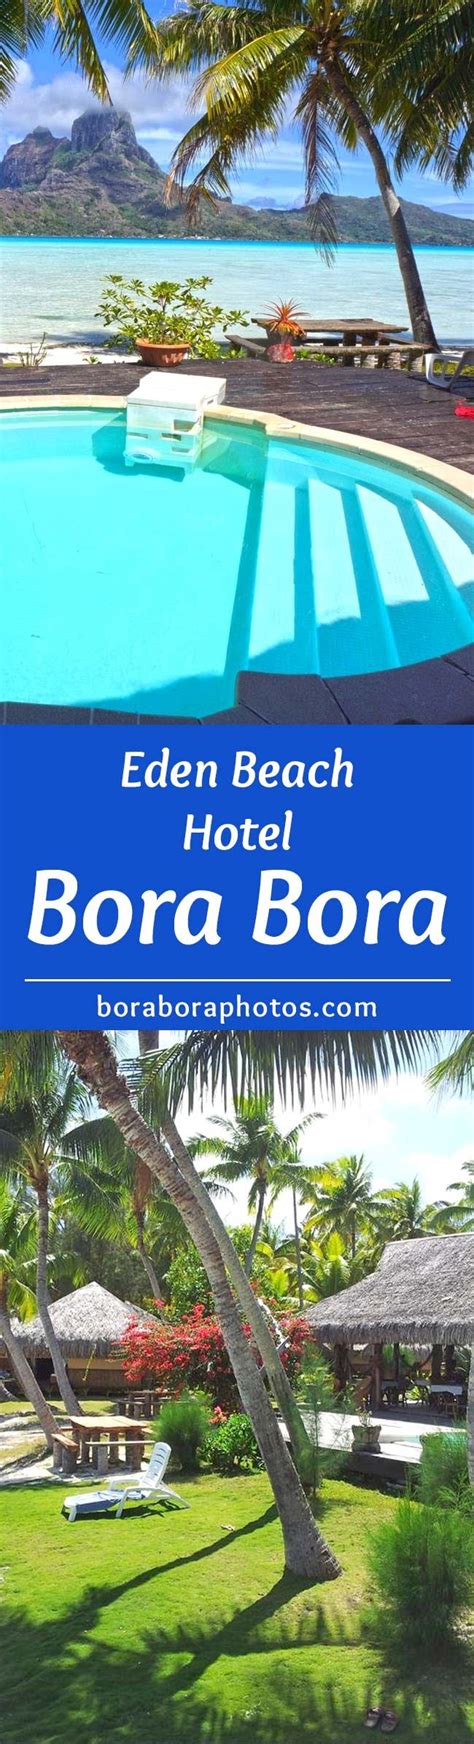 Bora Bora Eden Beach Hotel Beach Hotels Beach Vacation Wishes